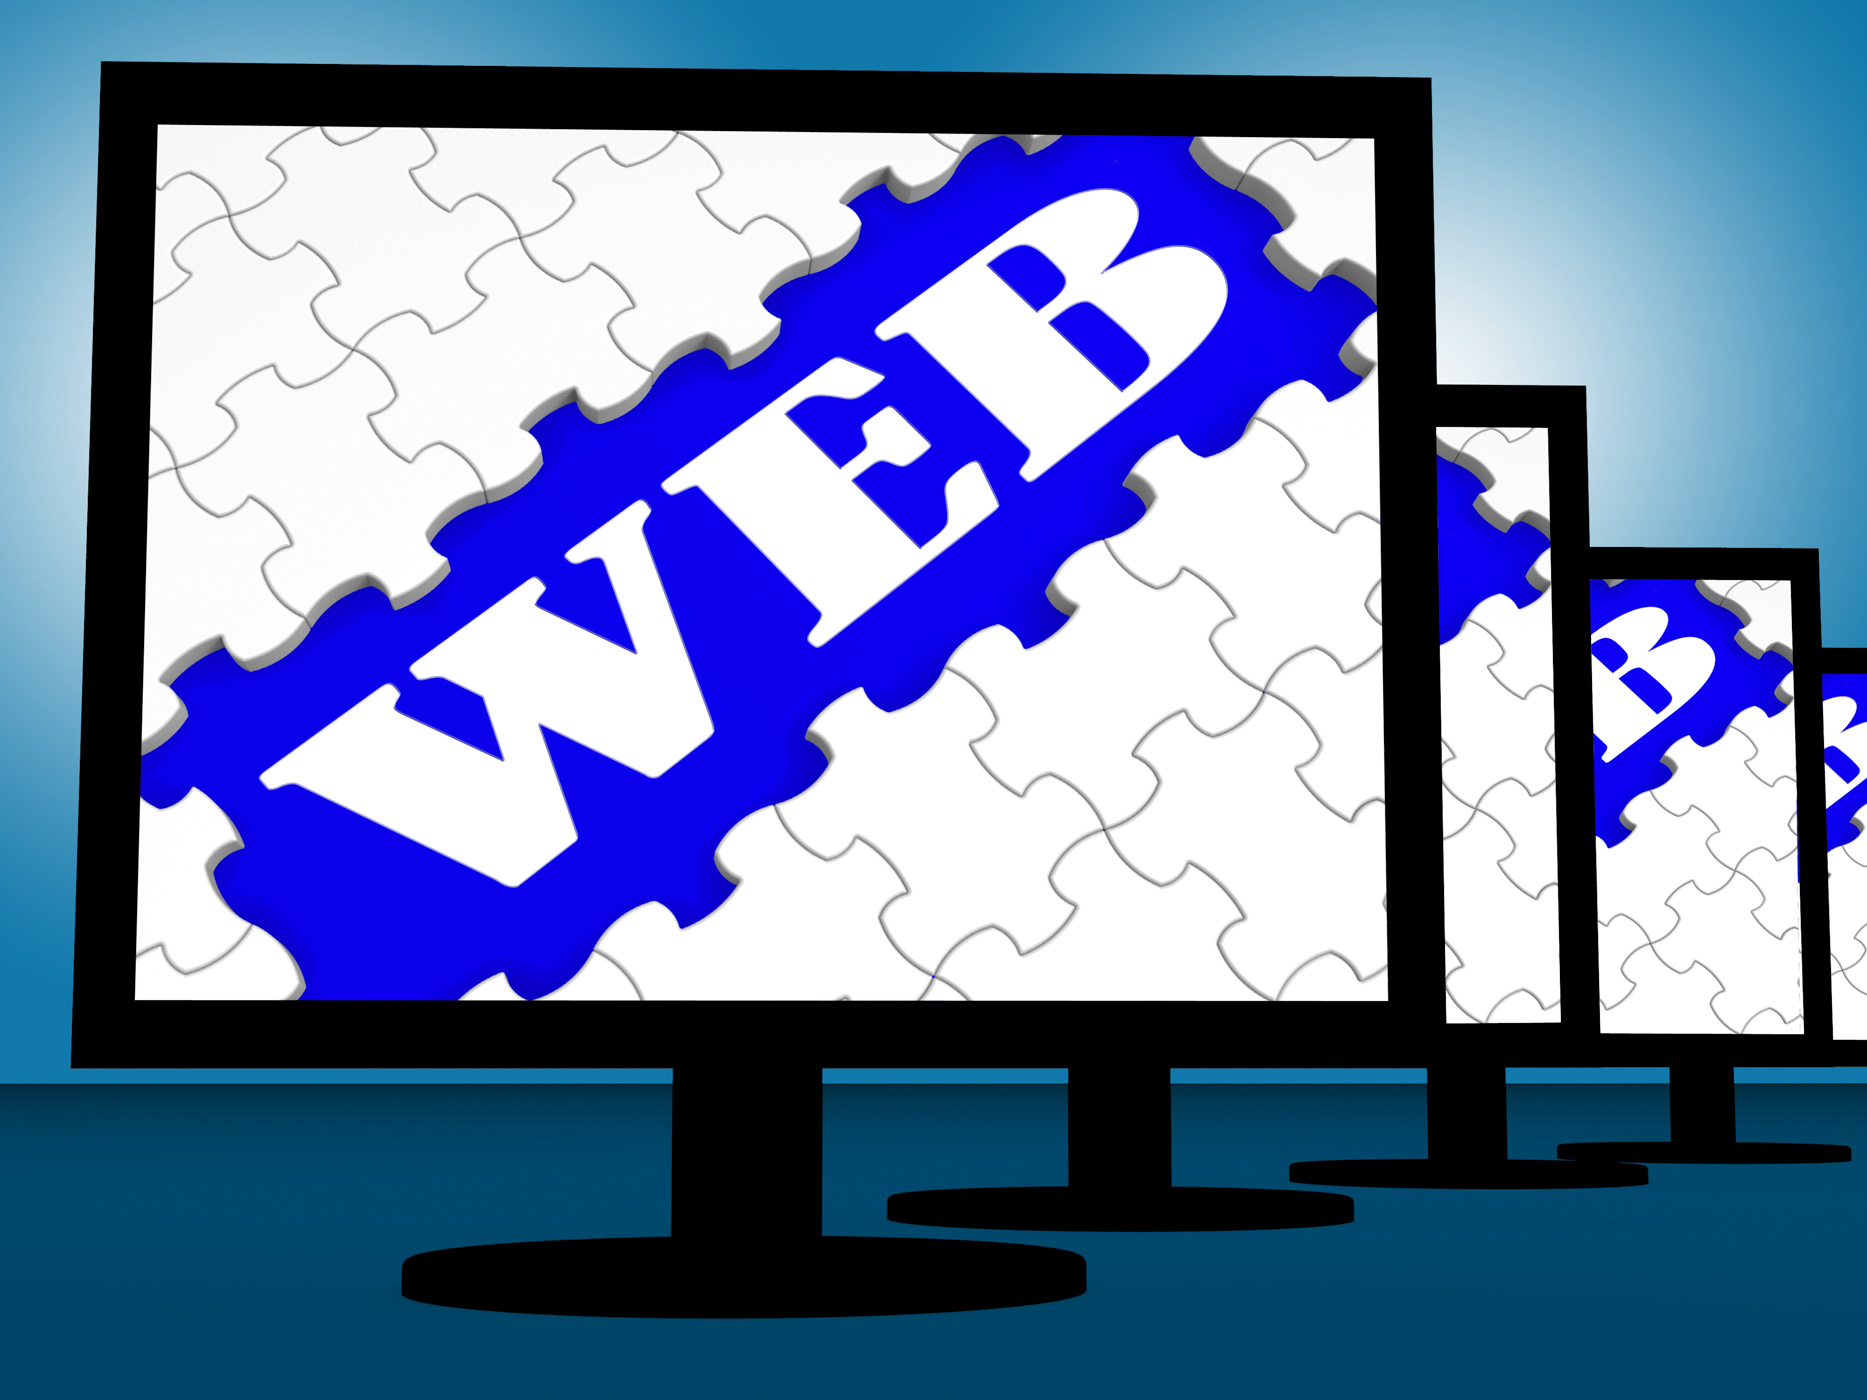 Web on monitors shows websites internet www or net photo